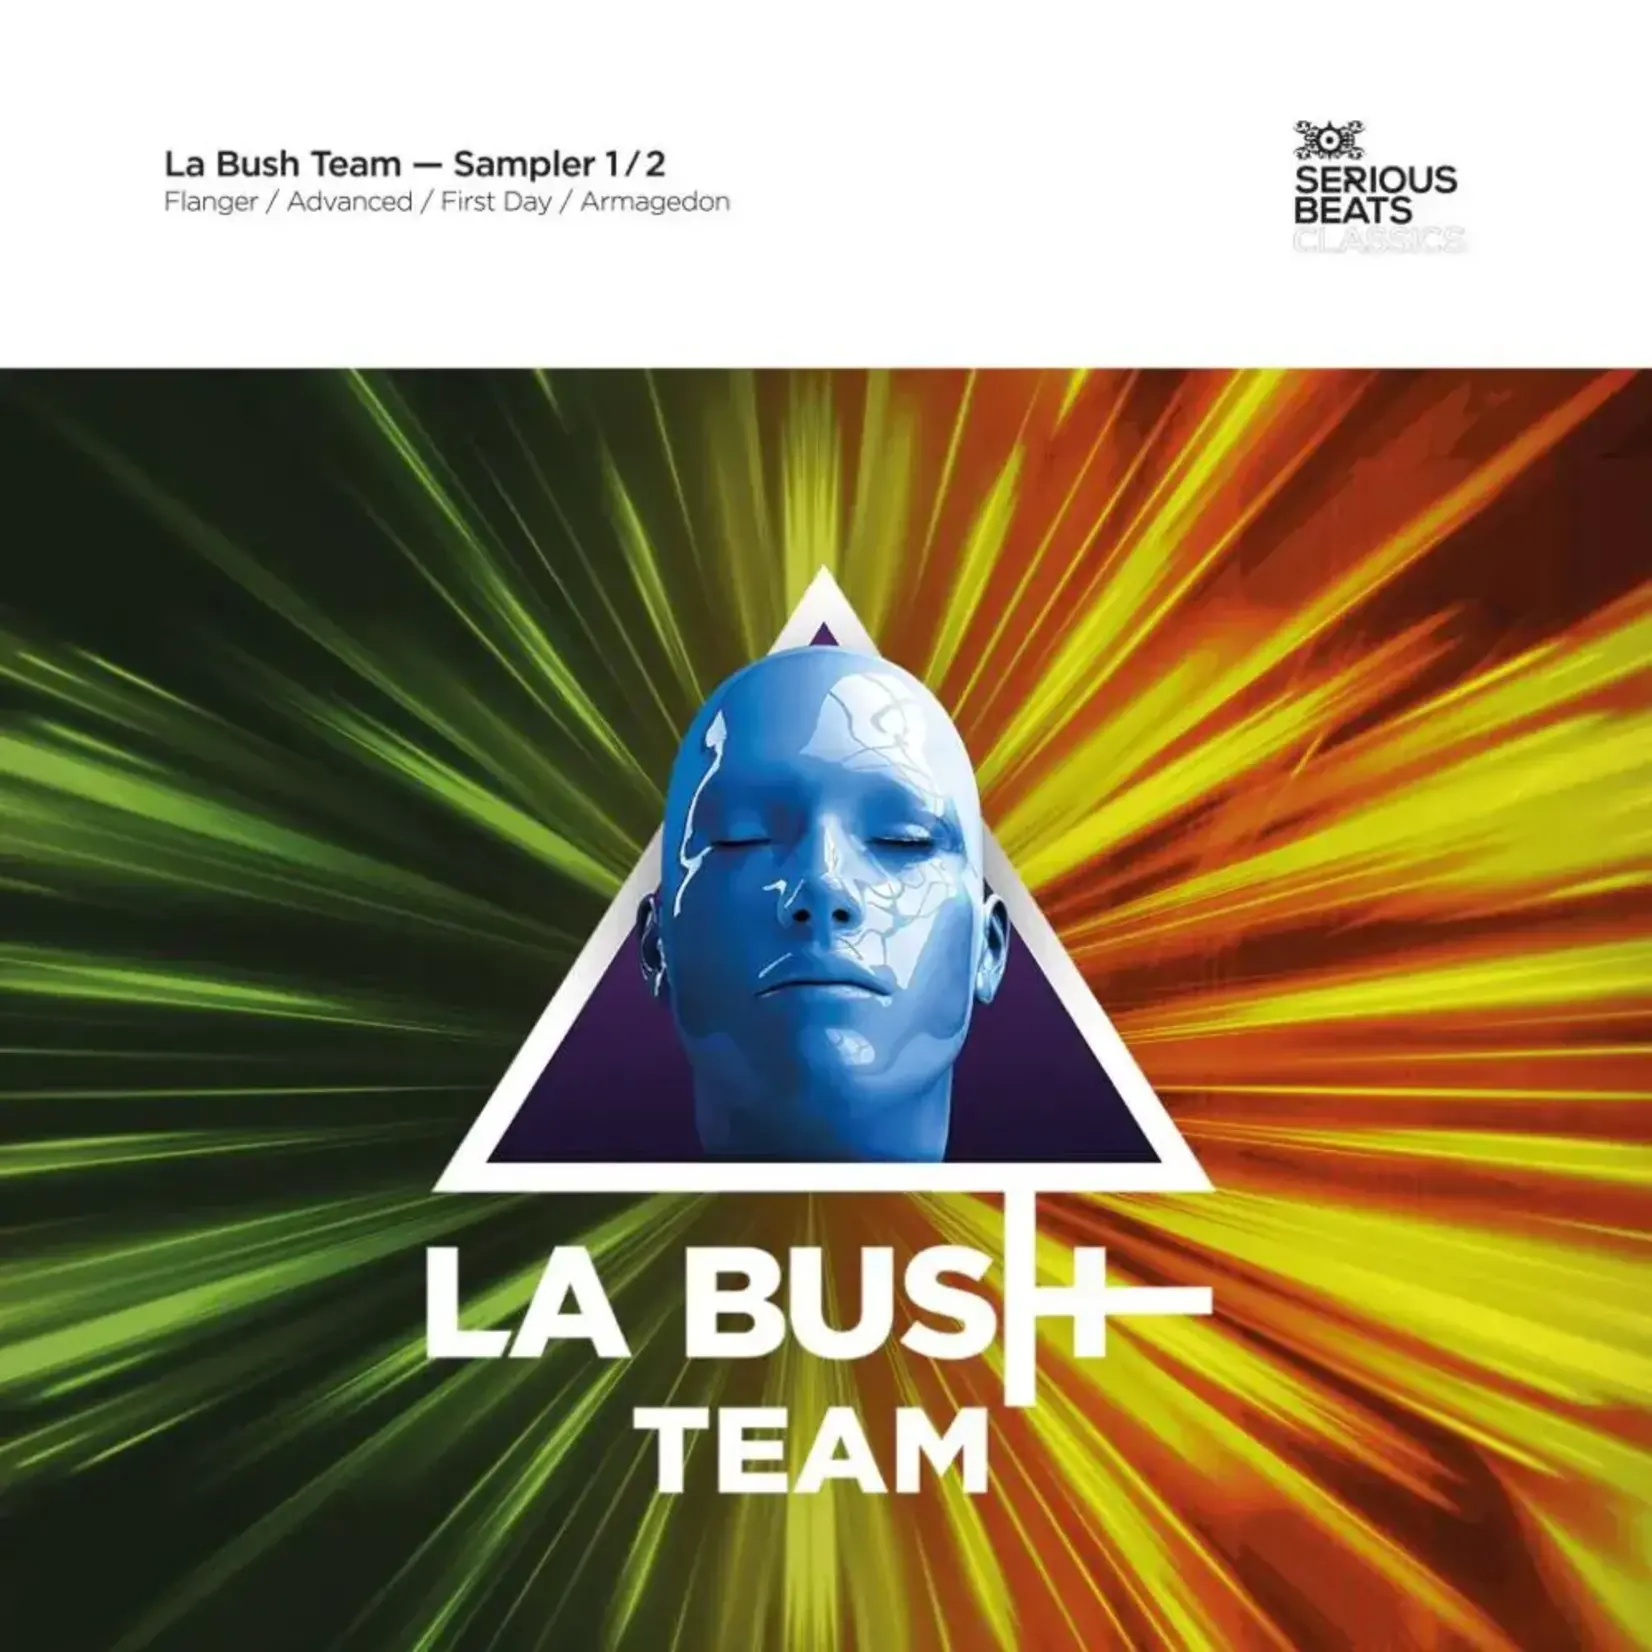 La Bush Team – Sampler 1/2